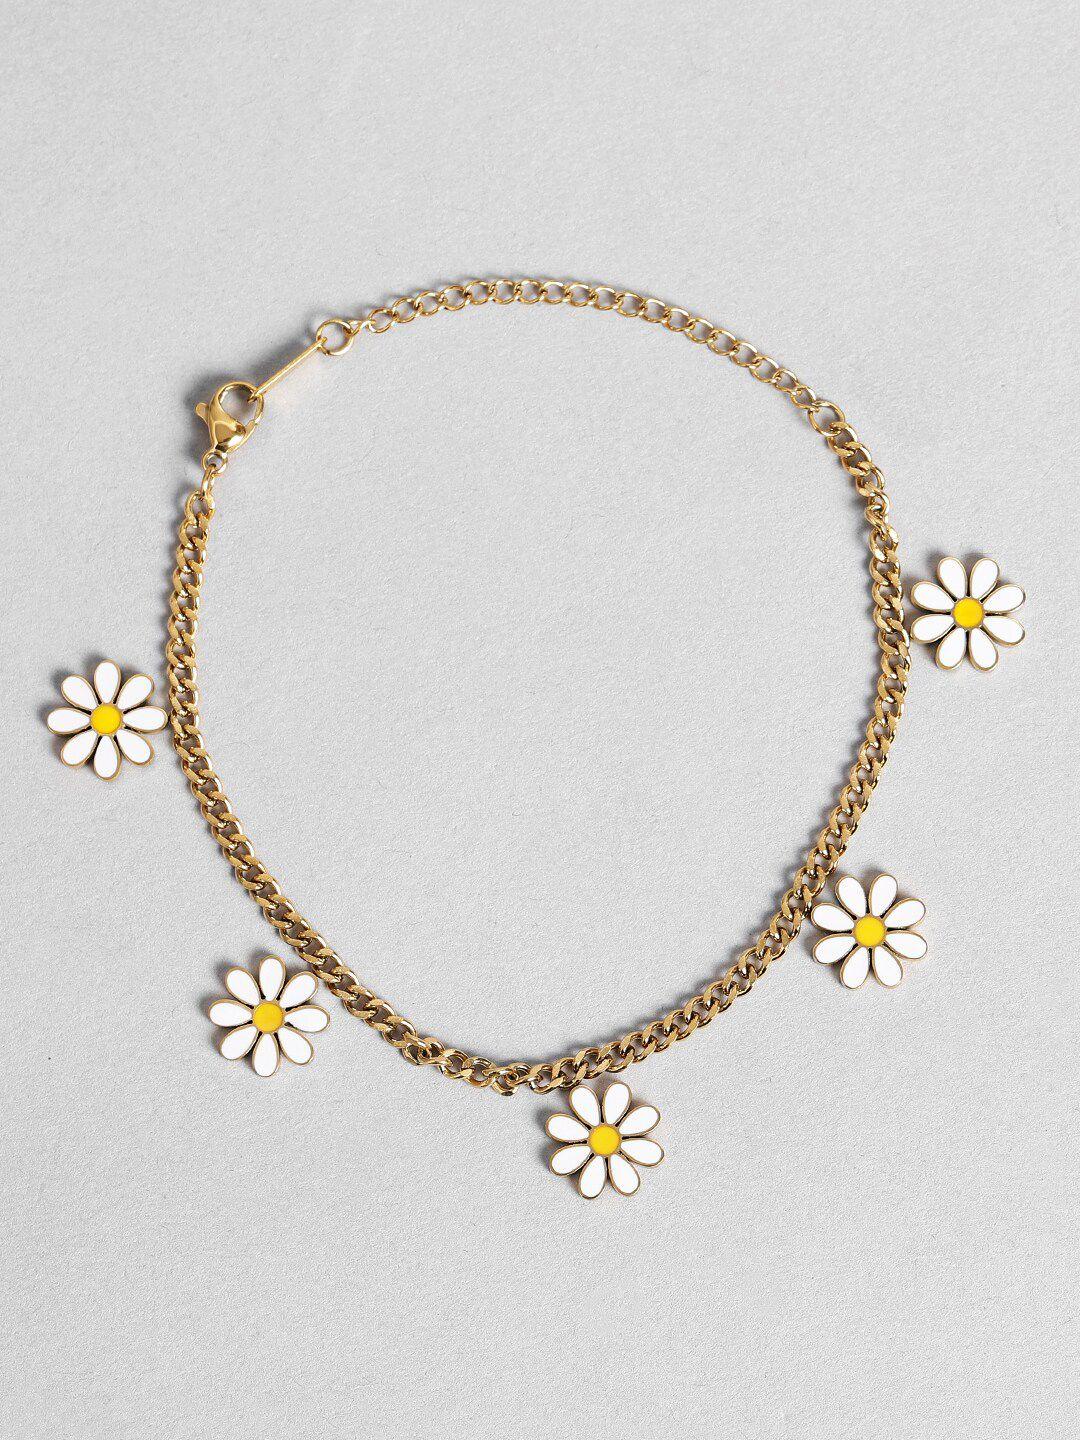 el regalo daisy charm bracelet